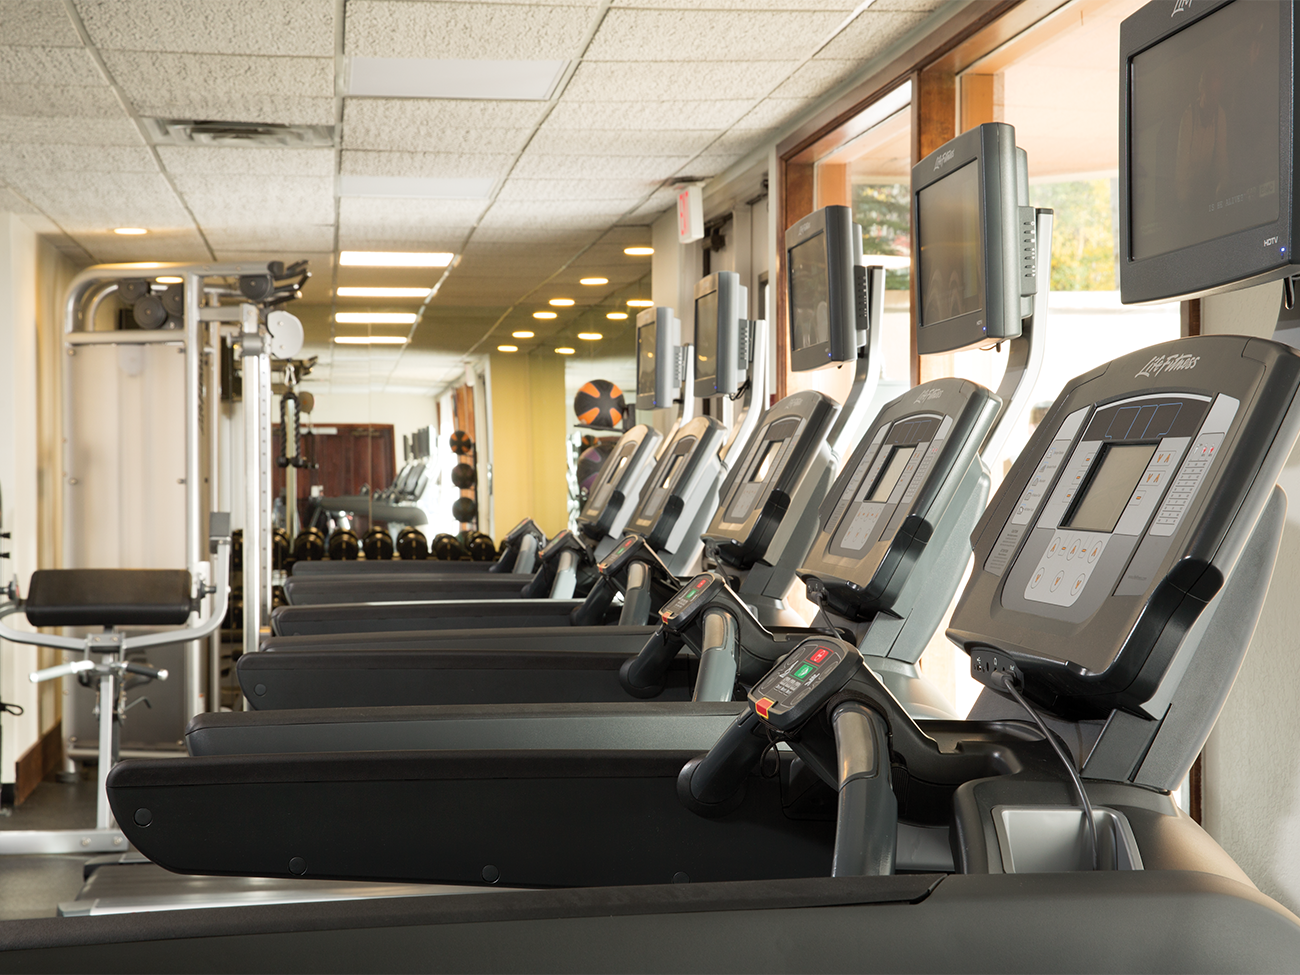 Fitness Center – Cardio Machines